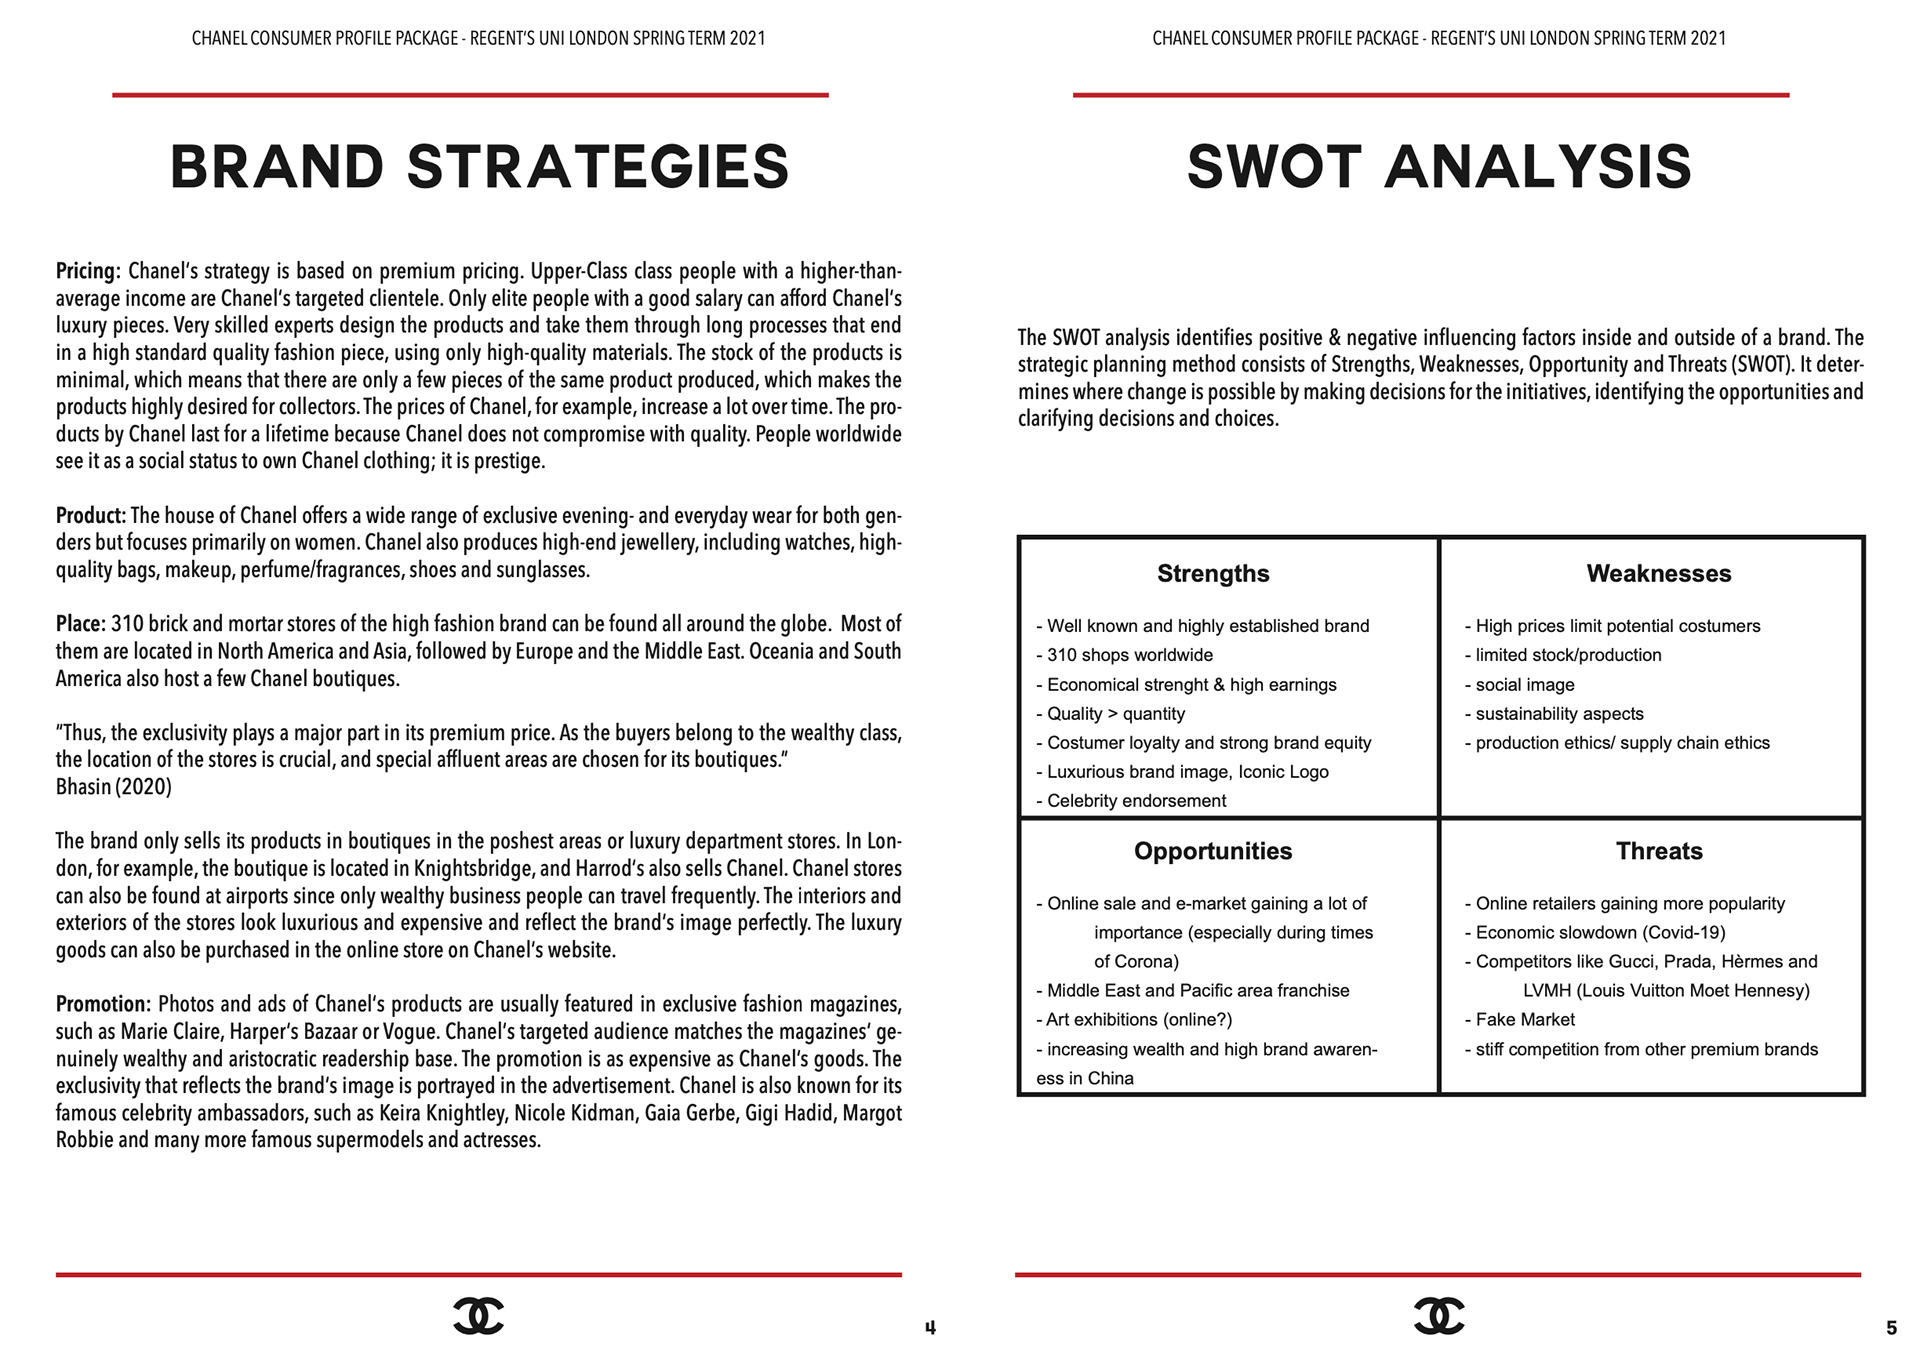 Louis Vuitton Marketing Analysis: SWOT, Segmentation, Marketing